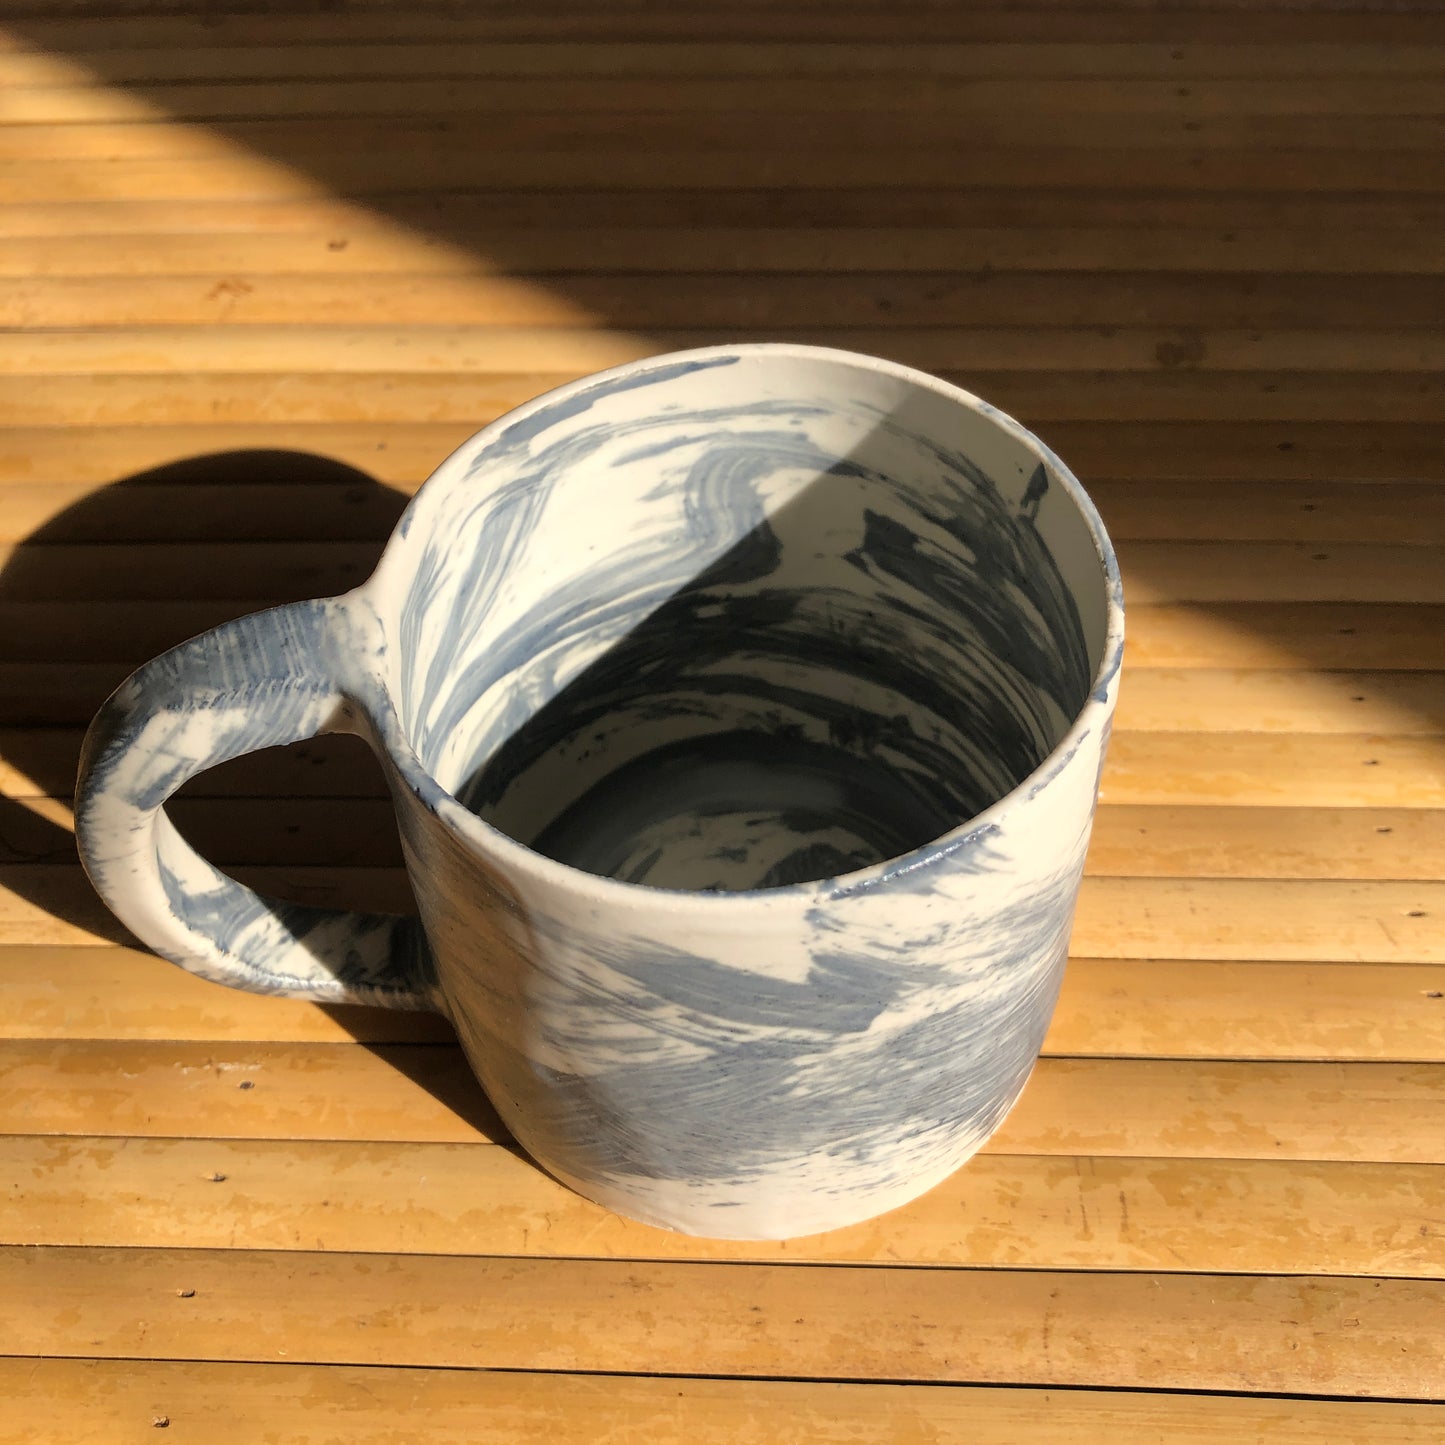 Handmade Stoneware Slip Mug